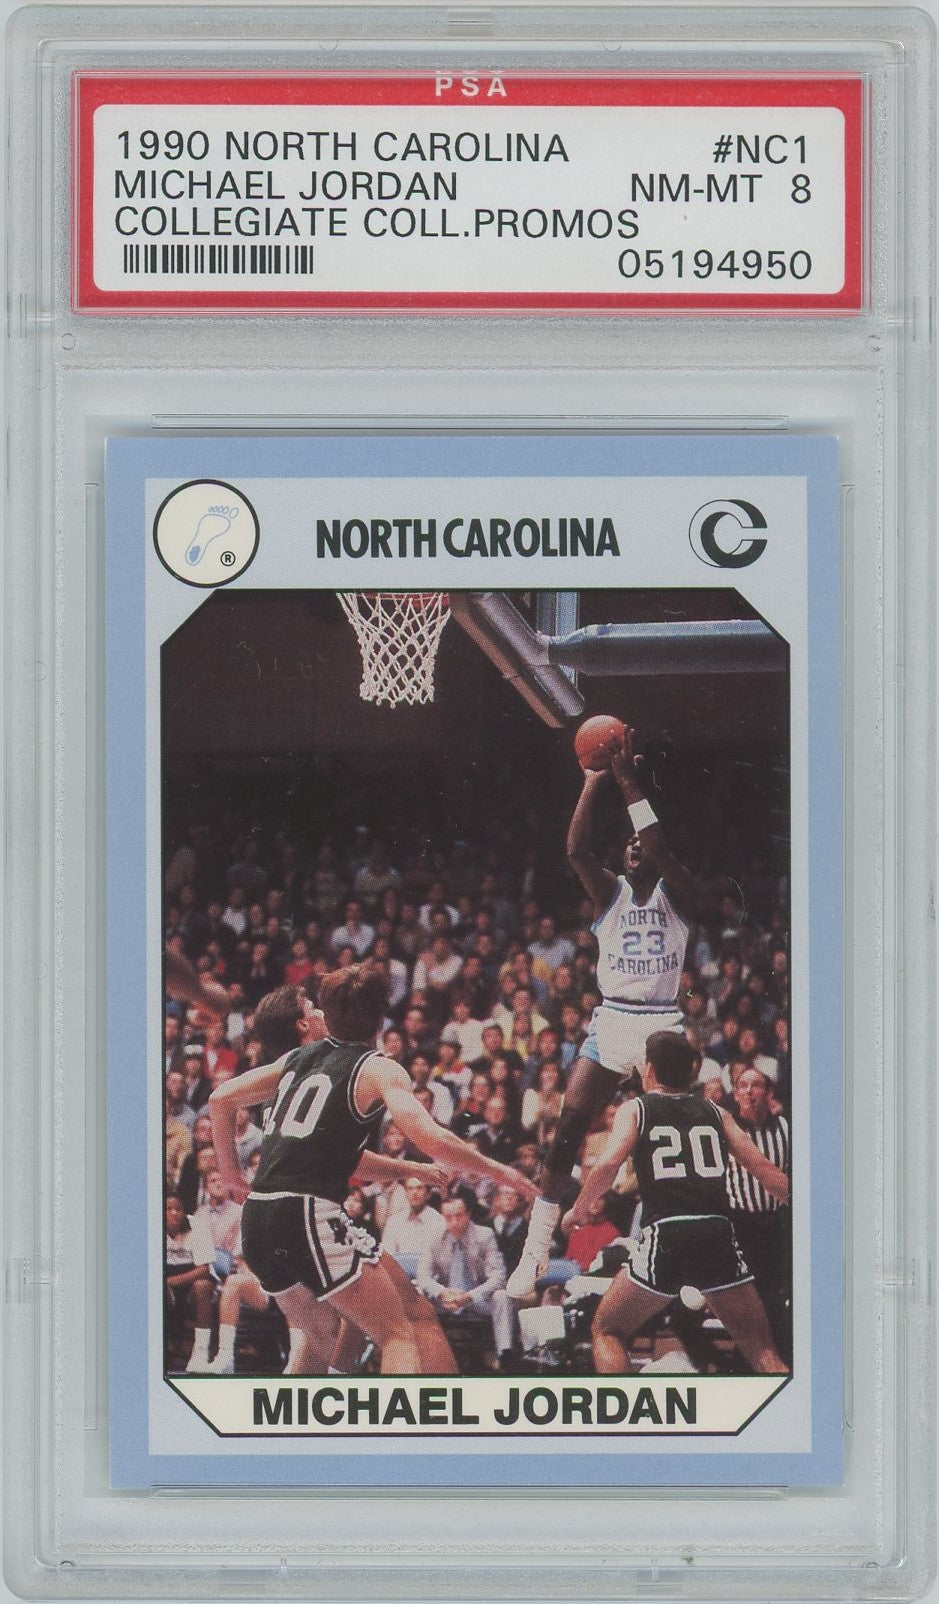 PSA 8 - 1989 North Carolina - Michael Jordan - Collegiate Collection #NC1